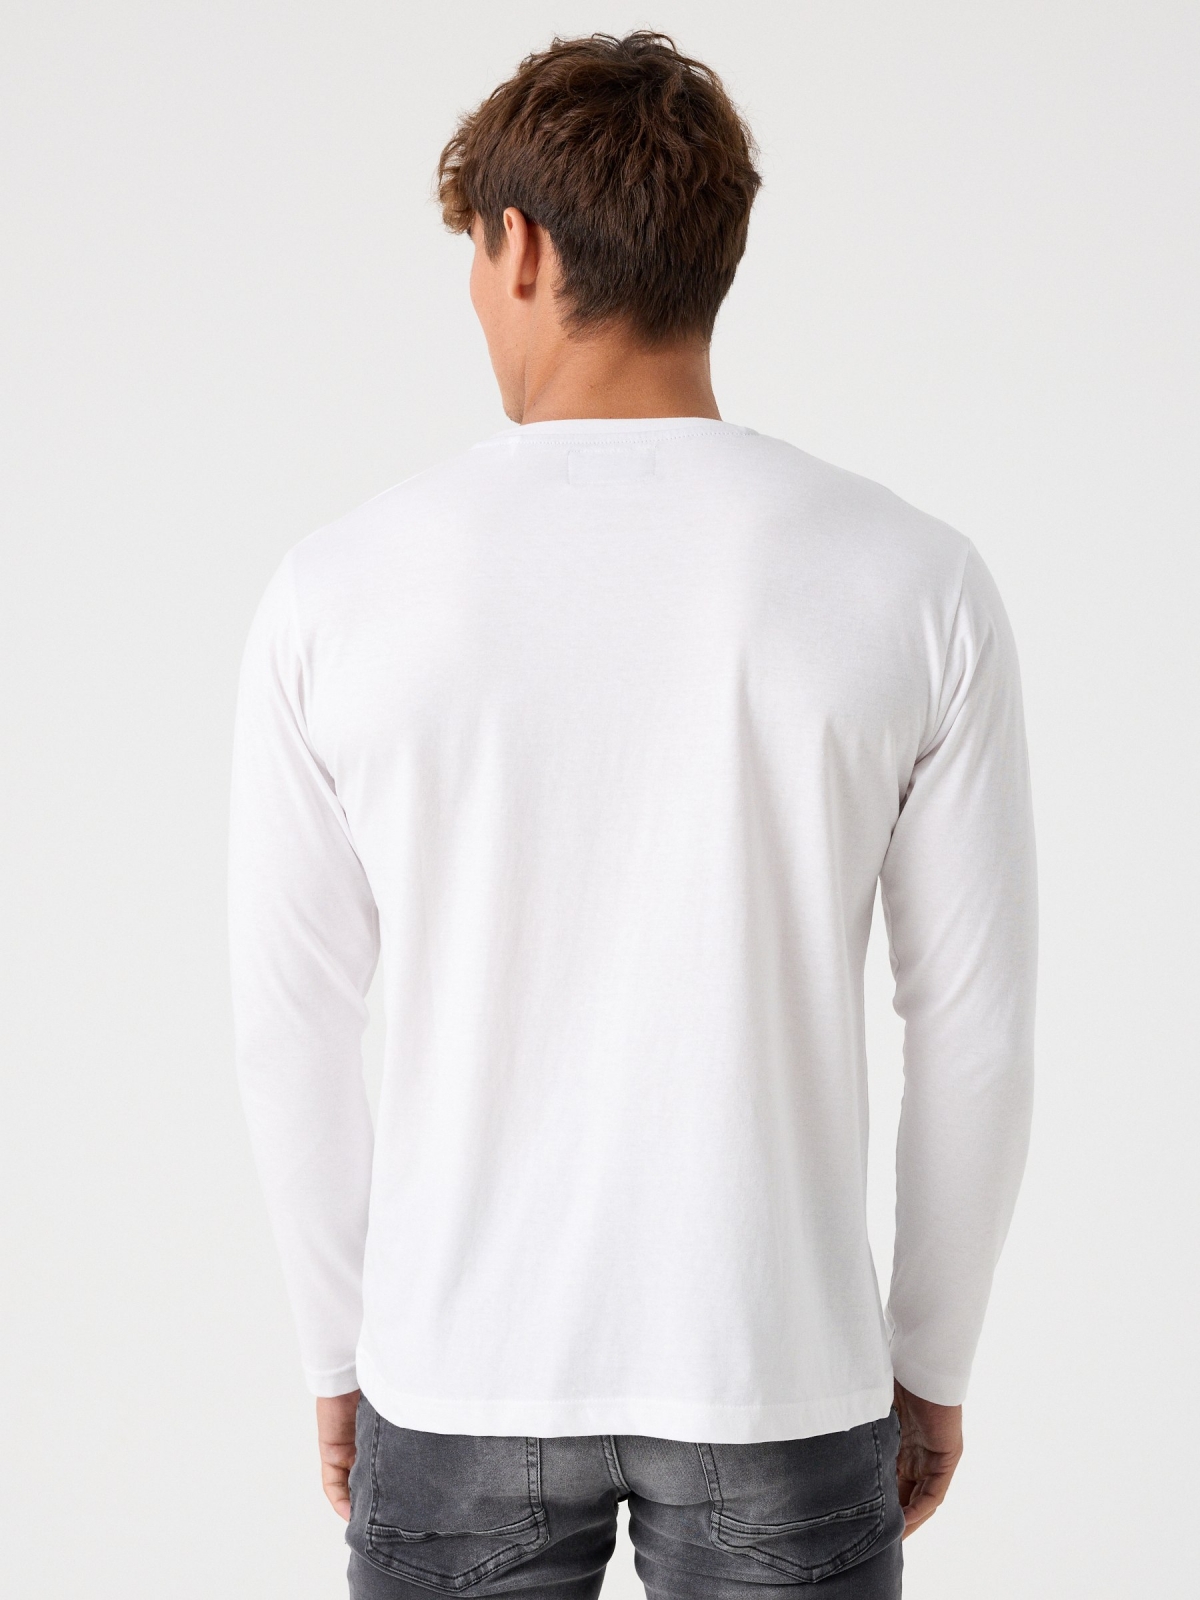 Camiseta básica con logo blanco vista media trasera